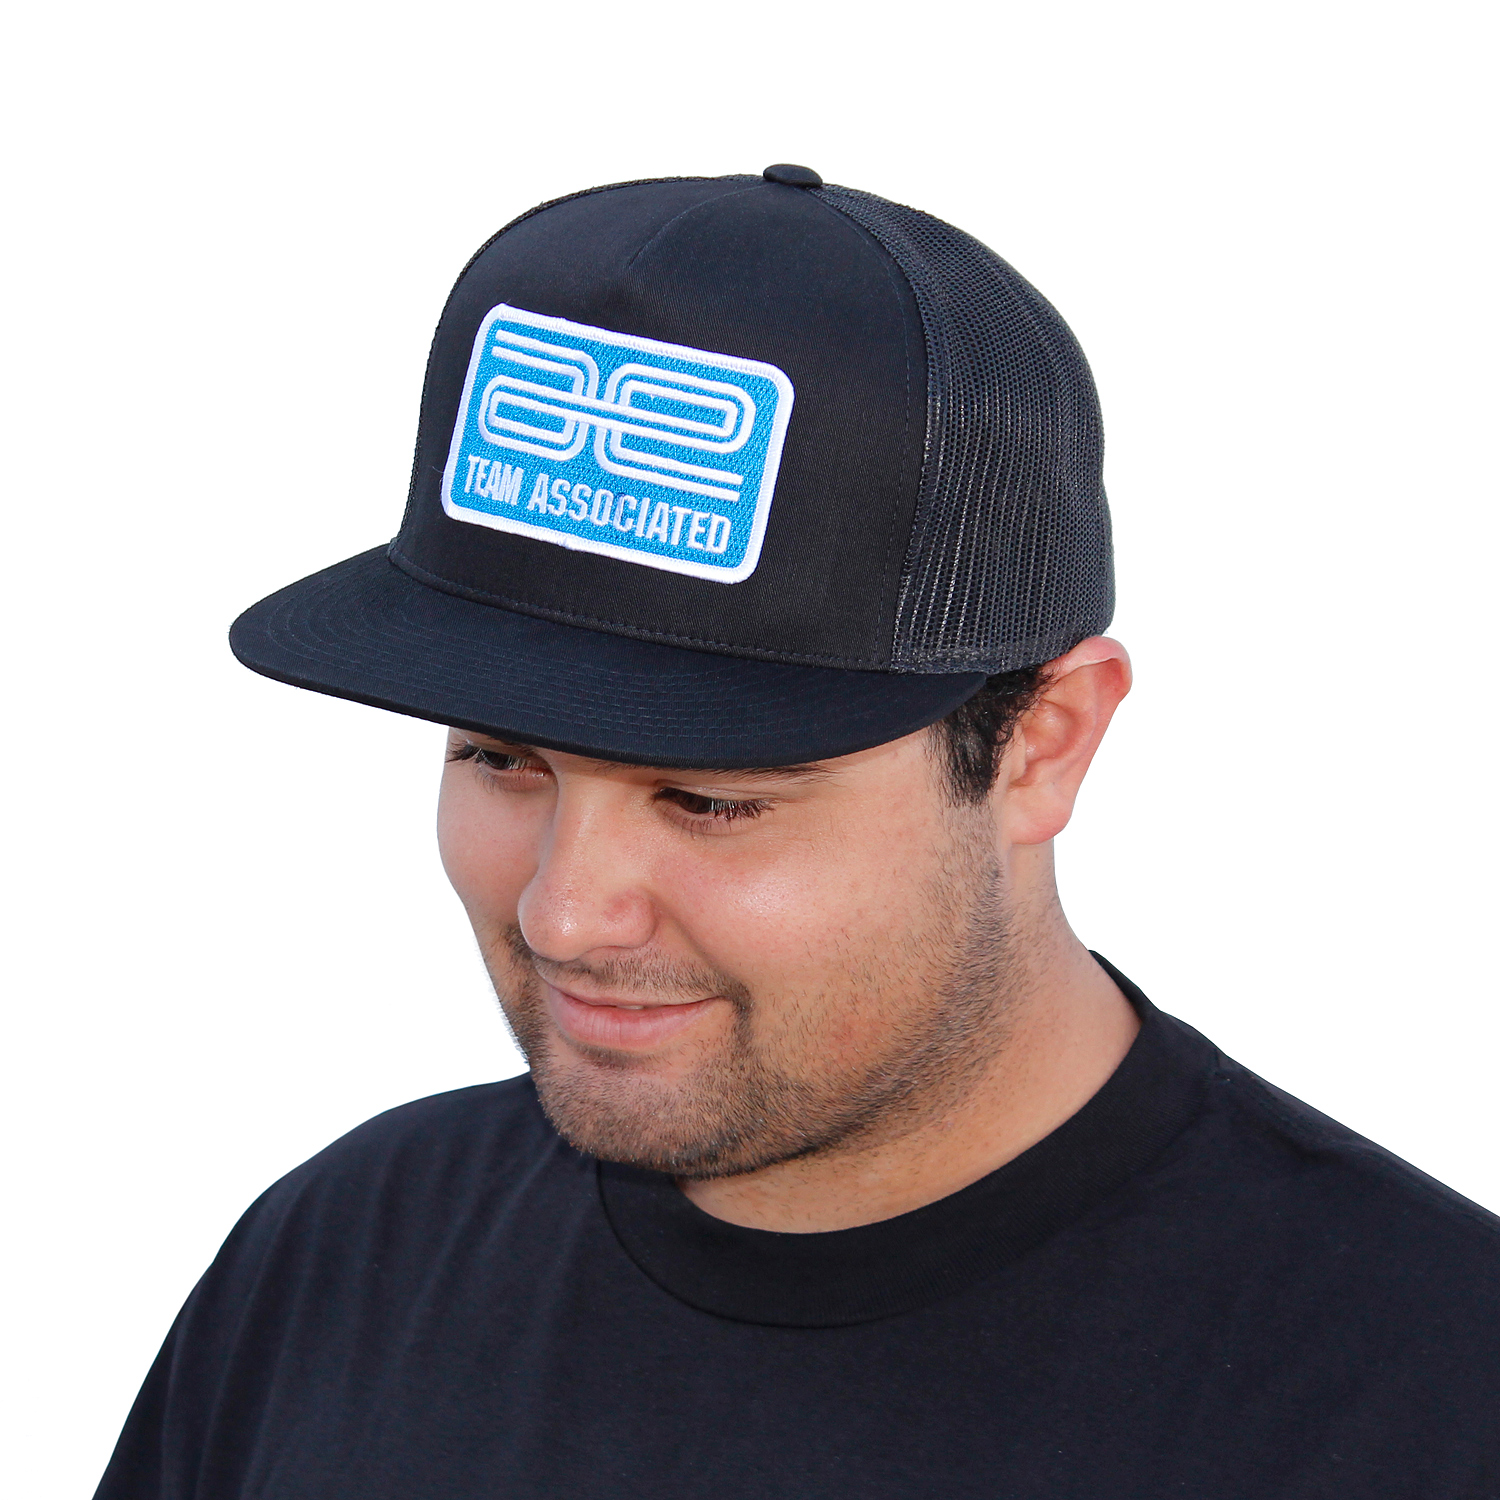 AE 2014 Trucker Snapback Hat, black